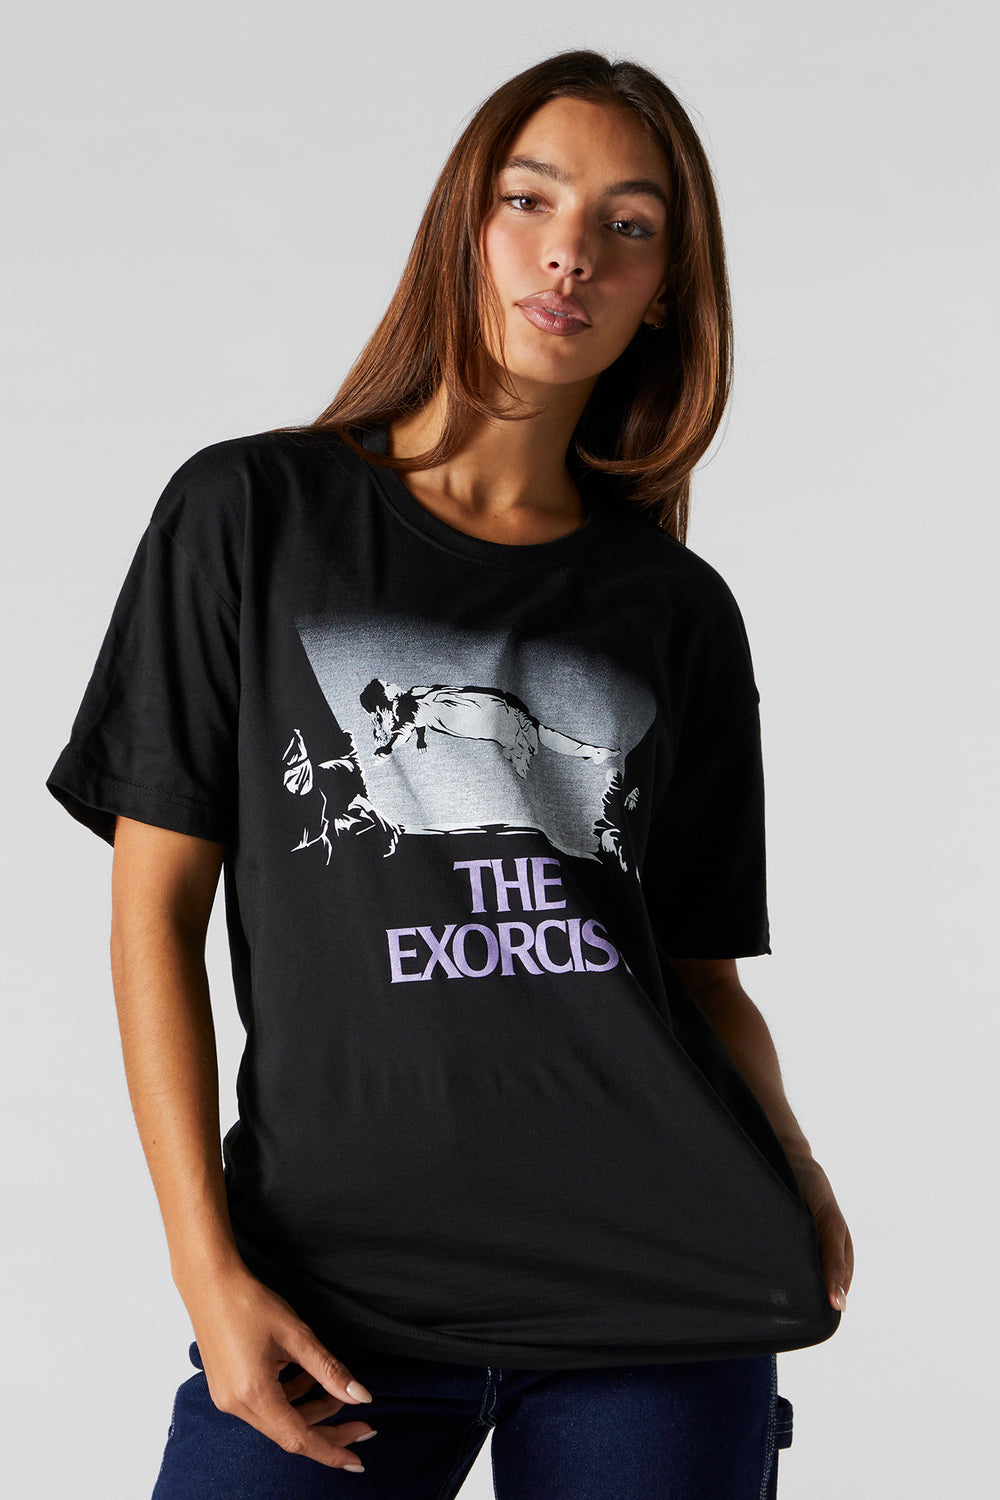 The Exorcist Graphic Boyfriend T-Shirt The Exorcist Graphic Boyfriend T-Shirt 1